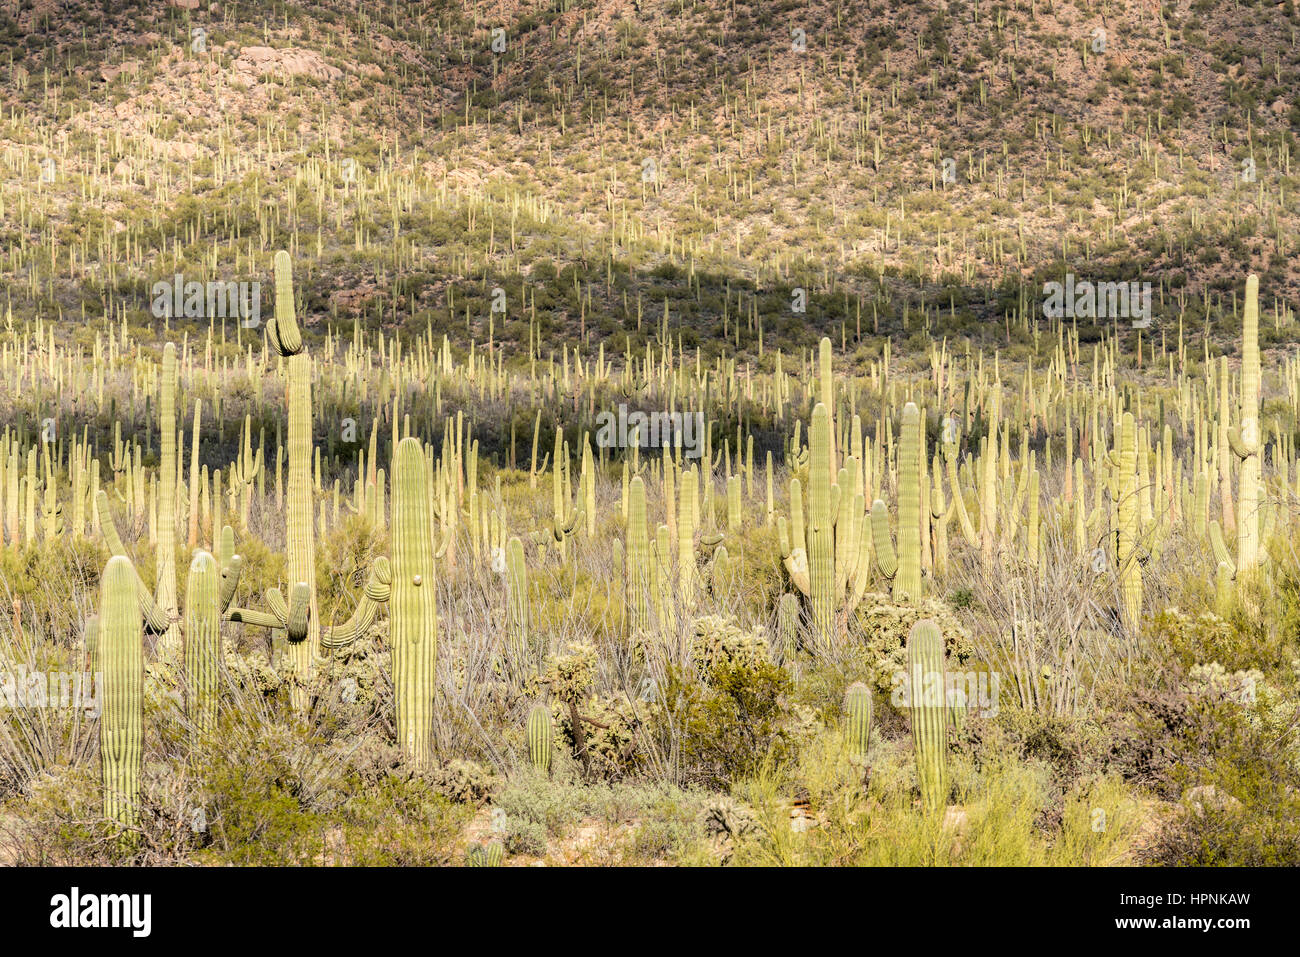 Thousands of saguaro cactus plants in National Park West near Tucson Arizona Stock Photo